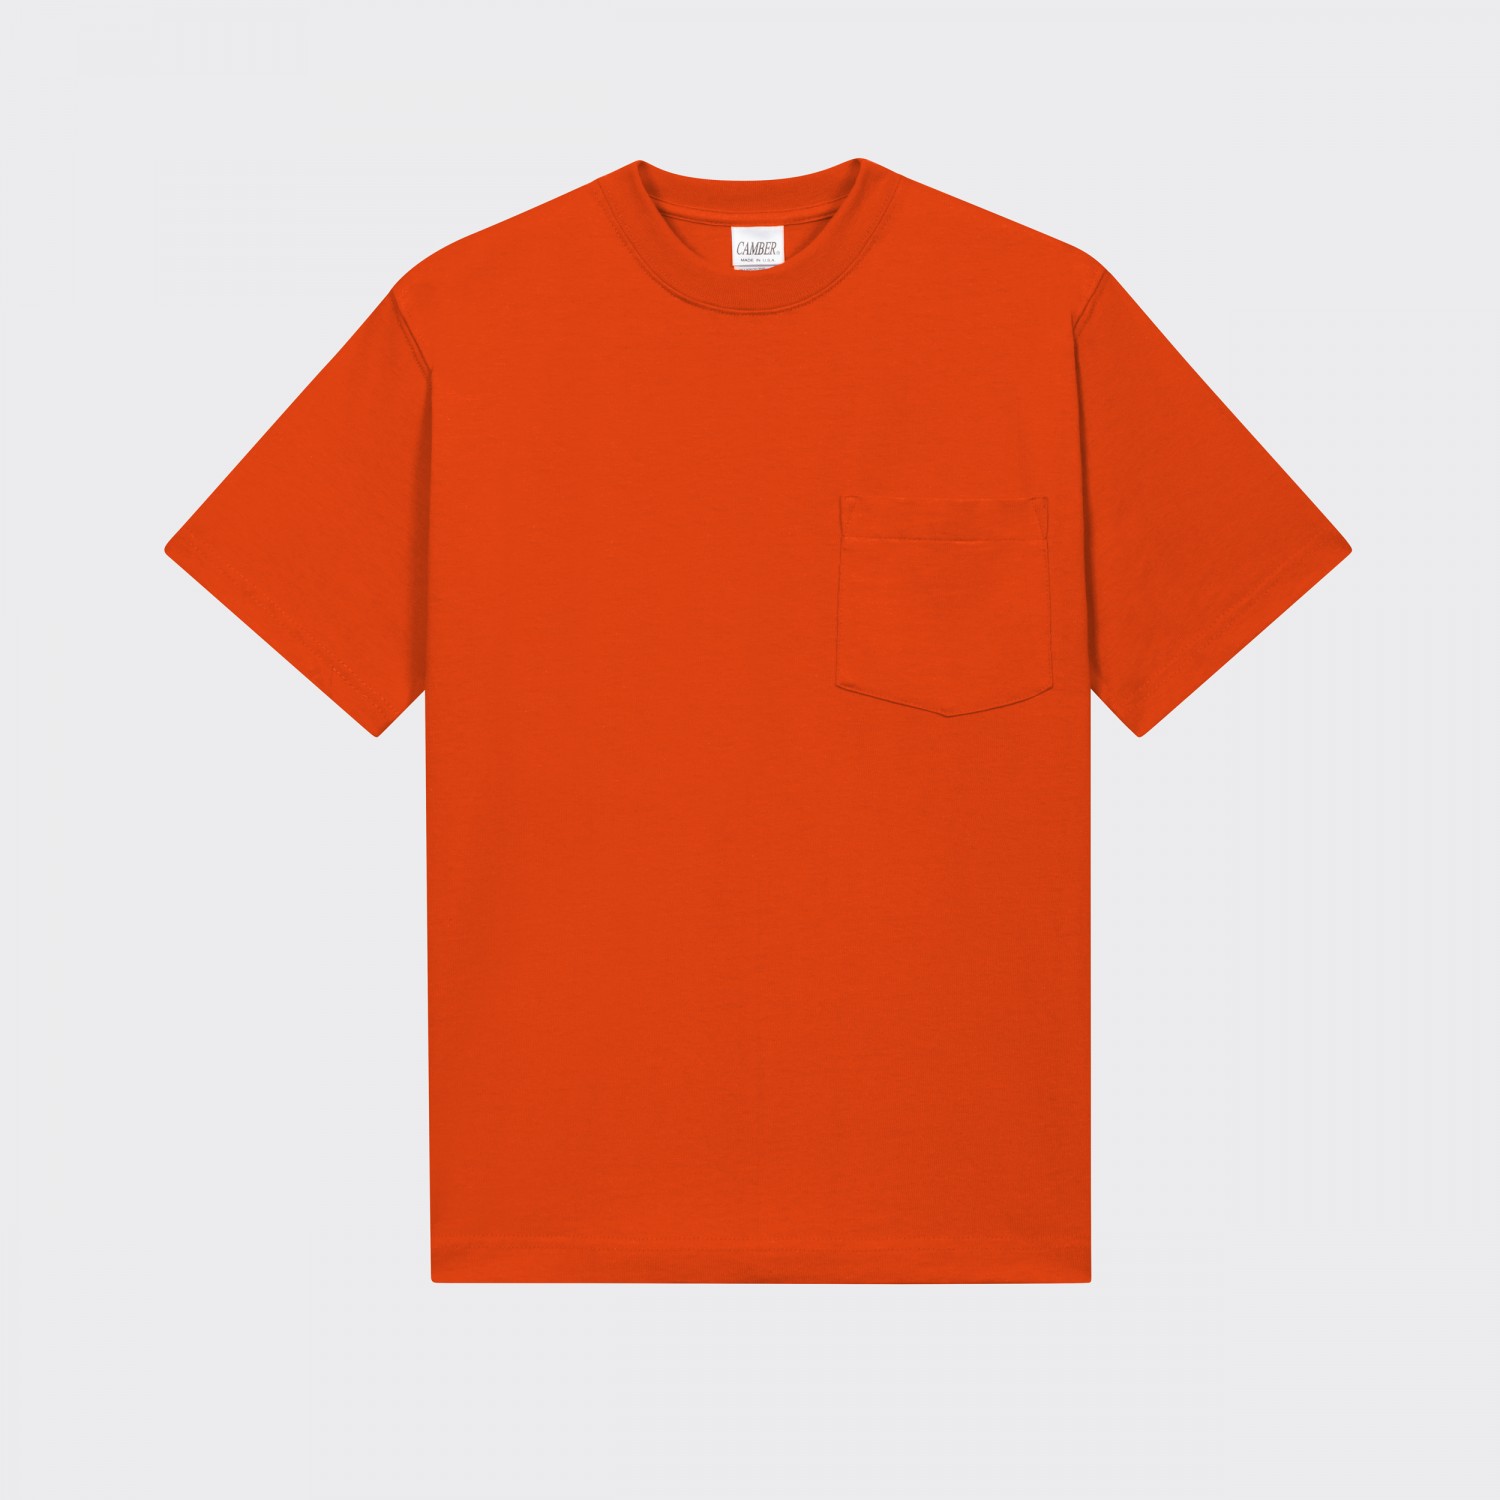 Camber USA : : Pocket Orange T-shirt